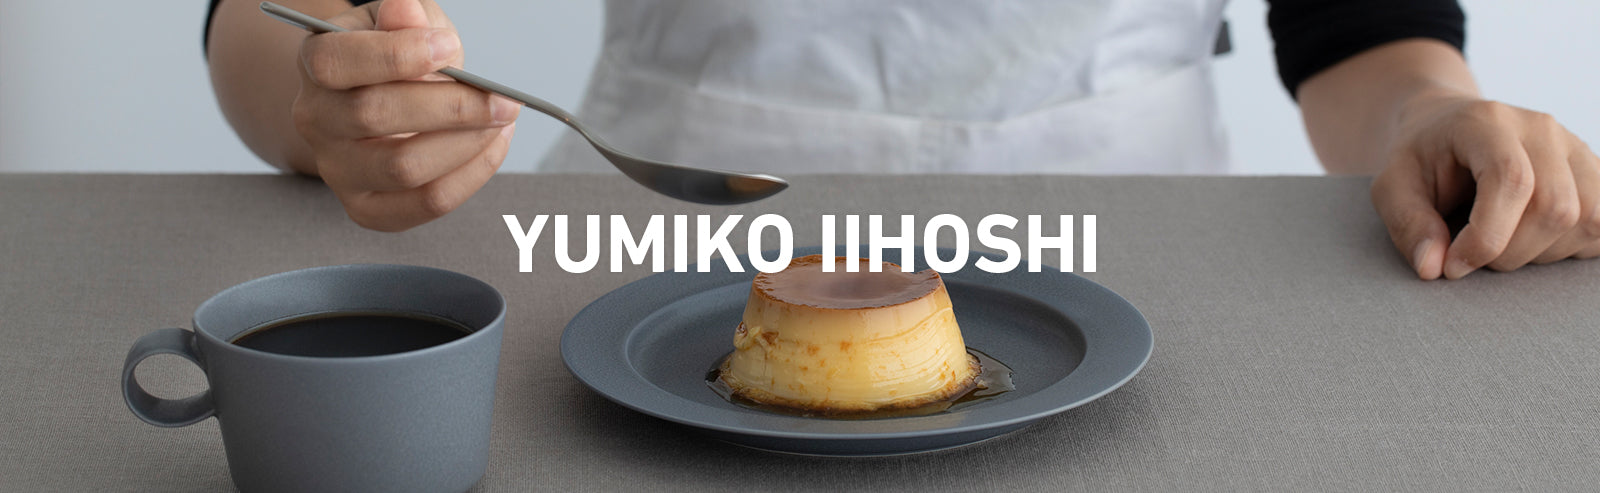 Meet the JAHOKO designer Yumiko Iihoshi